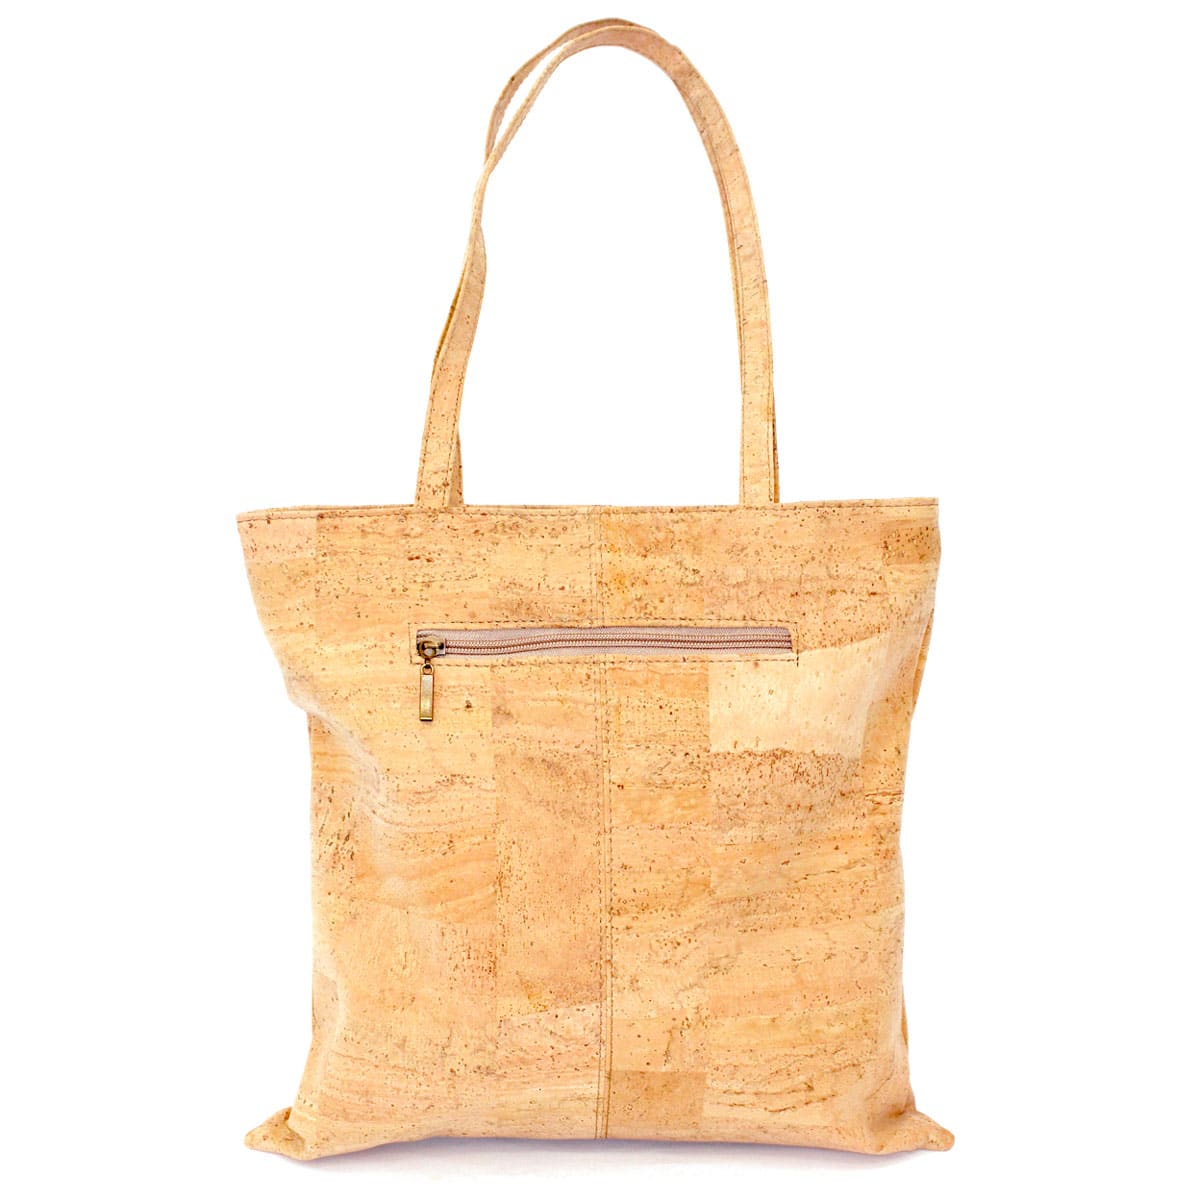 Shoppingtasche «Tijolo» aus Kork